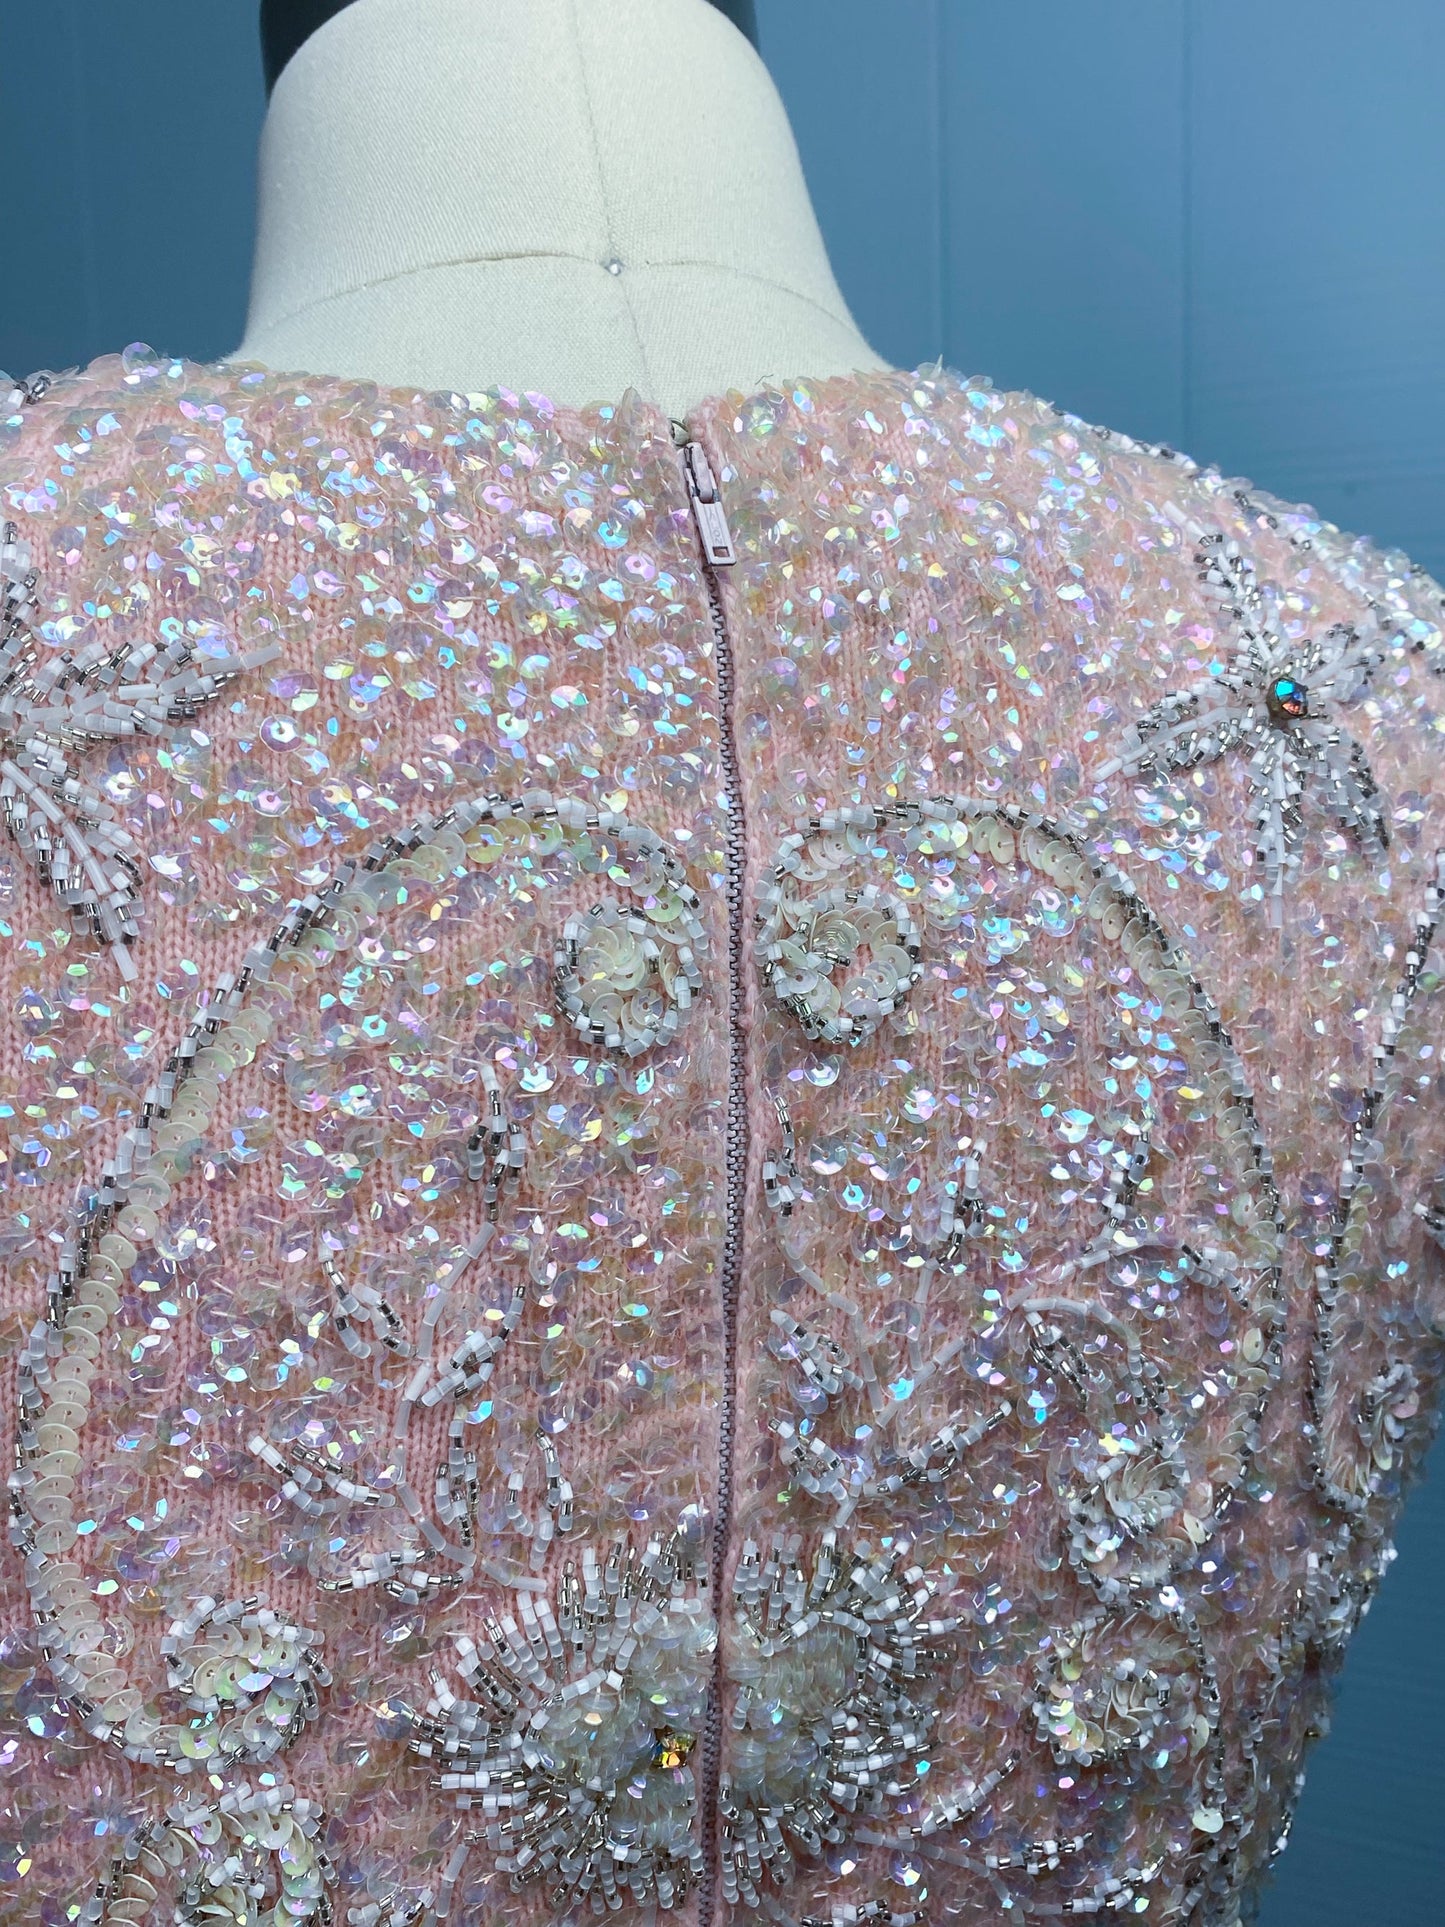 60s Beaded Pink Knit Dress